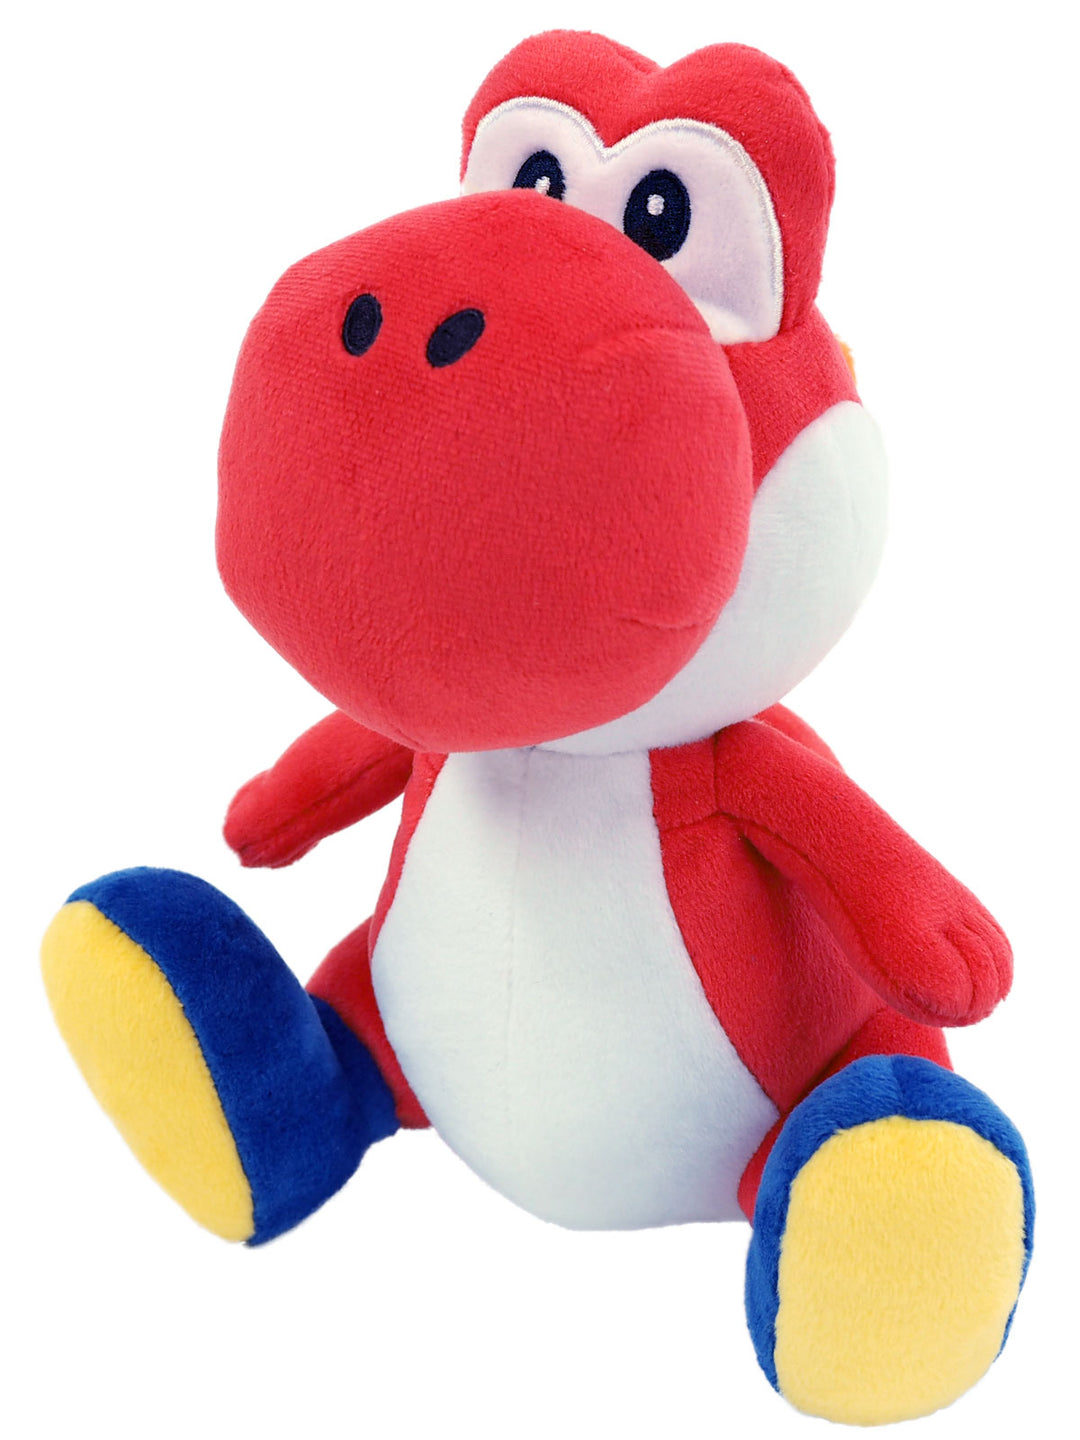 Little Buddy Super Mario Red Yoshi 8" Plush